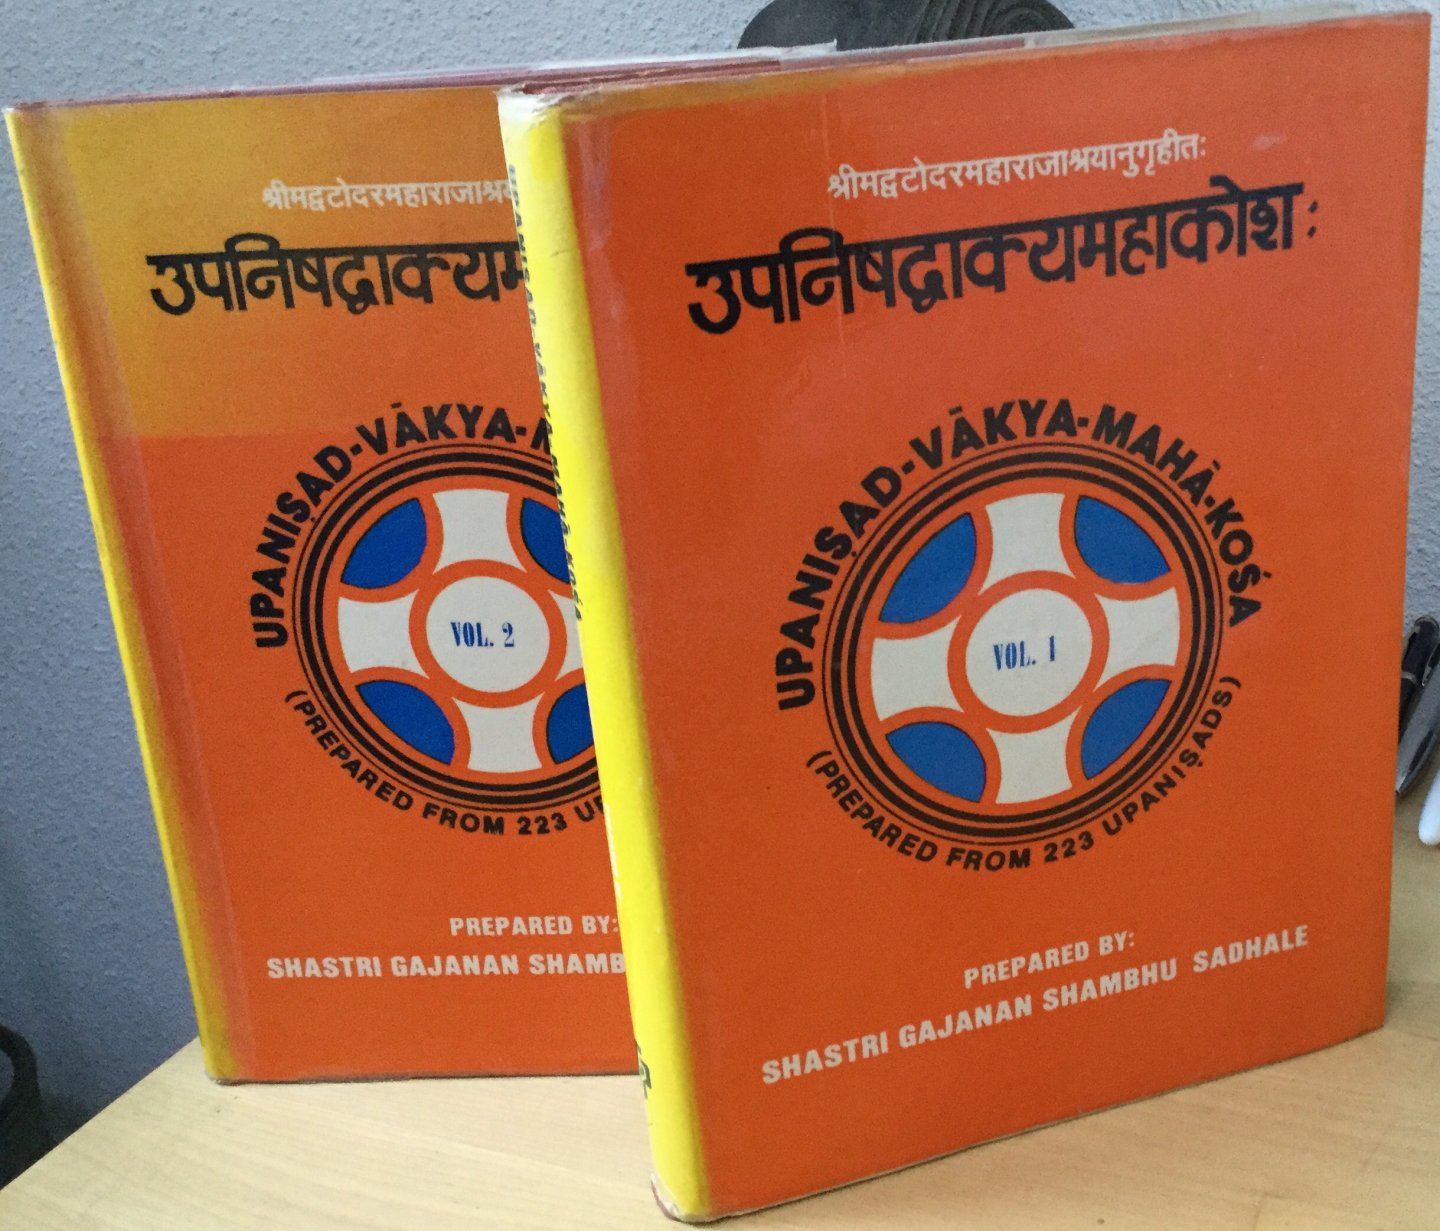 Shastri Gajanan Shambhu Sadhale (prepared by) - Upanisad-Vakya-Maha-Kosa (prepared from 223 Upanisads), volume I and II